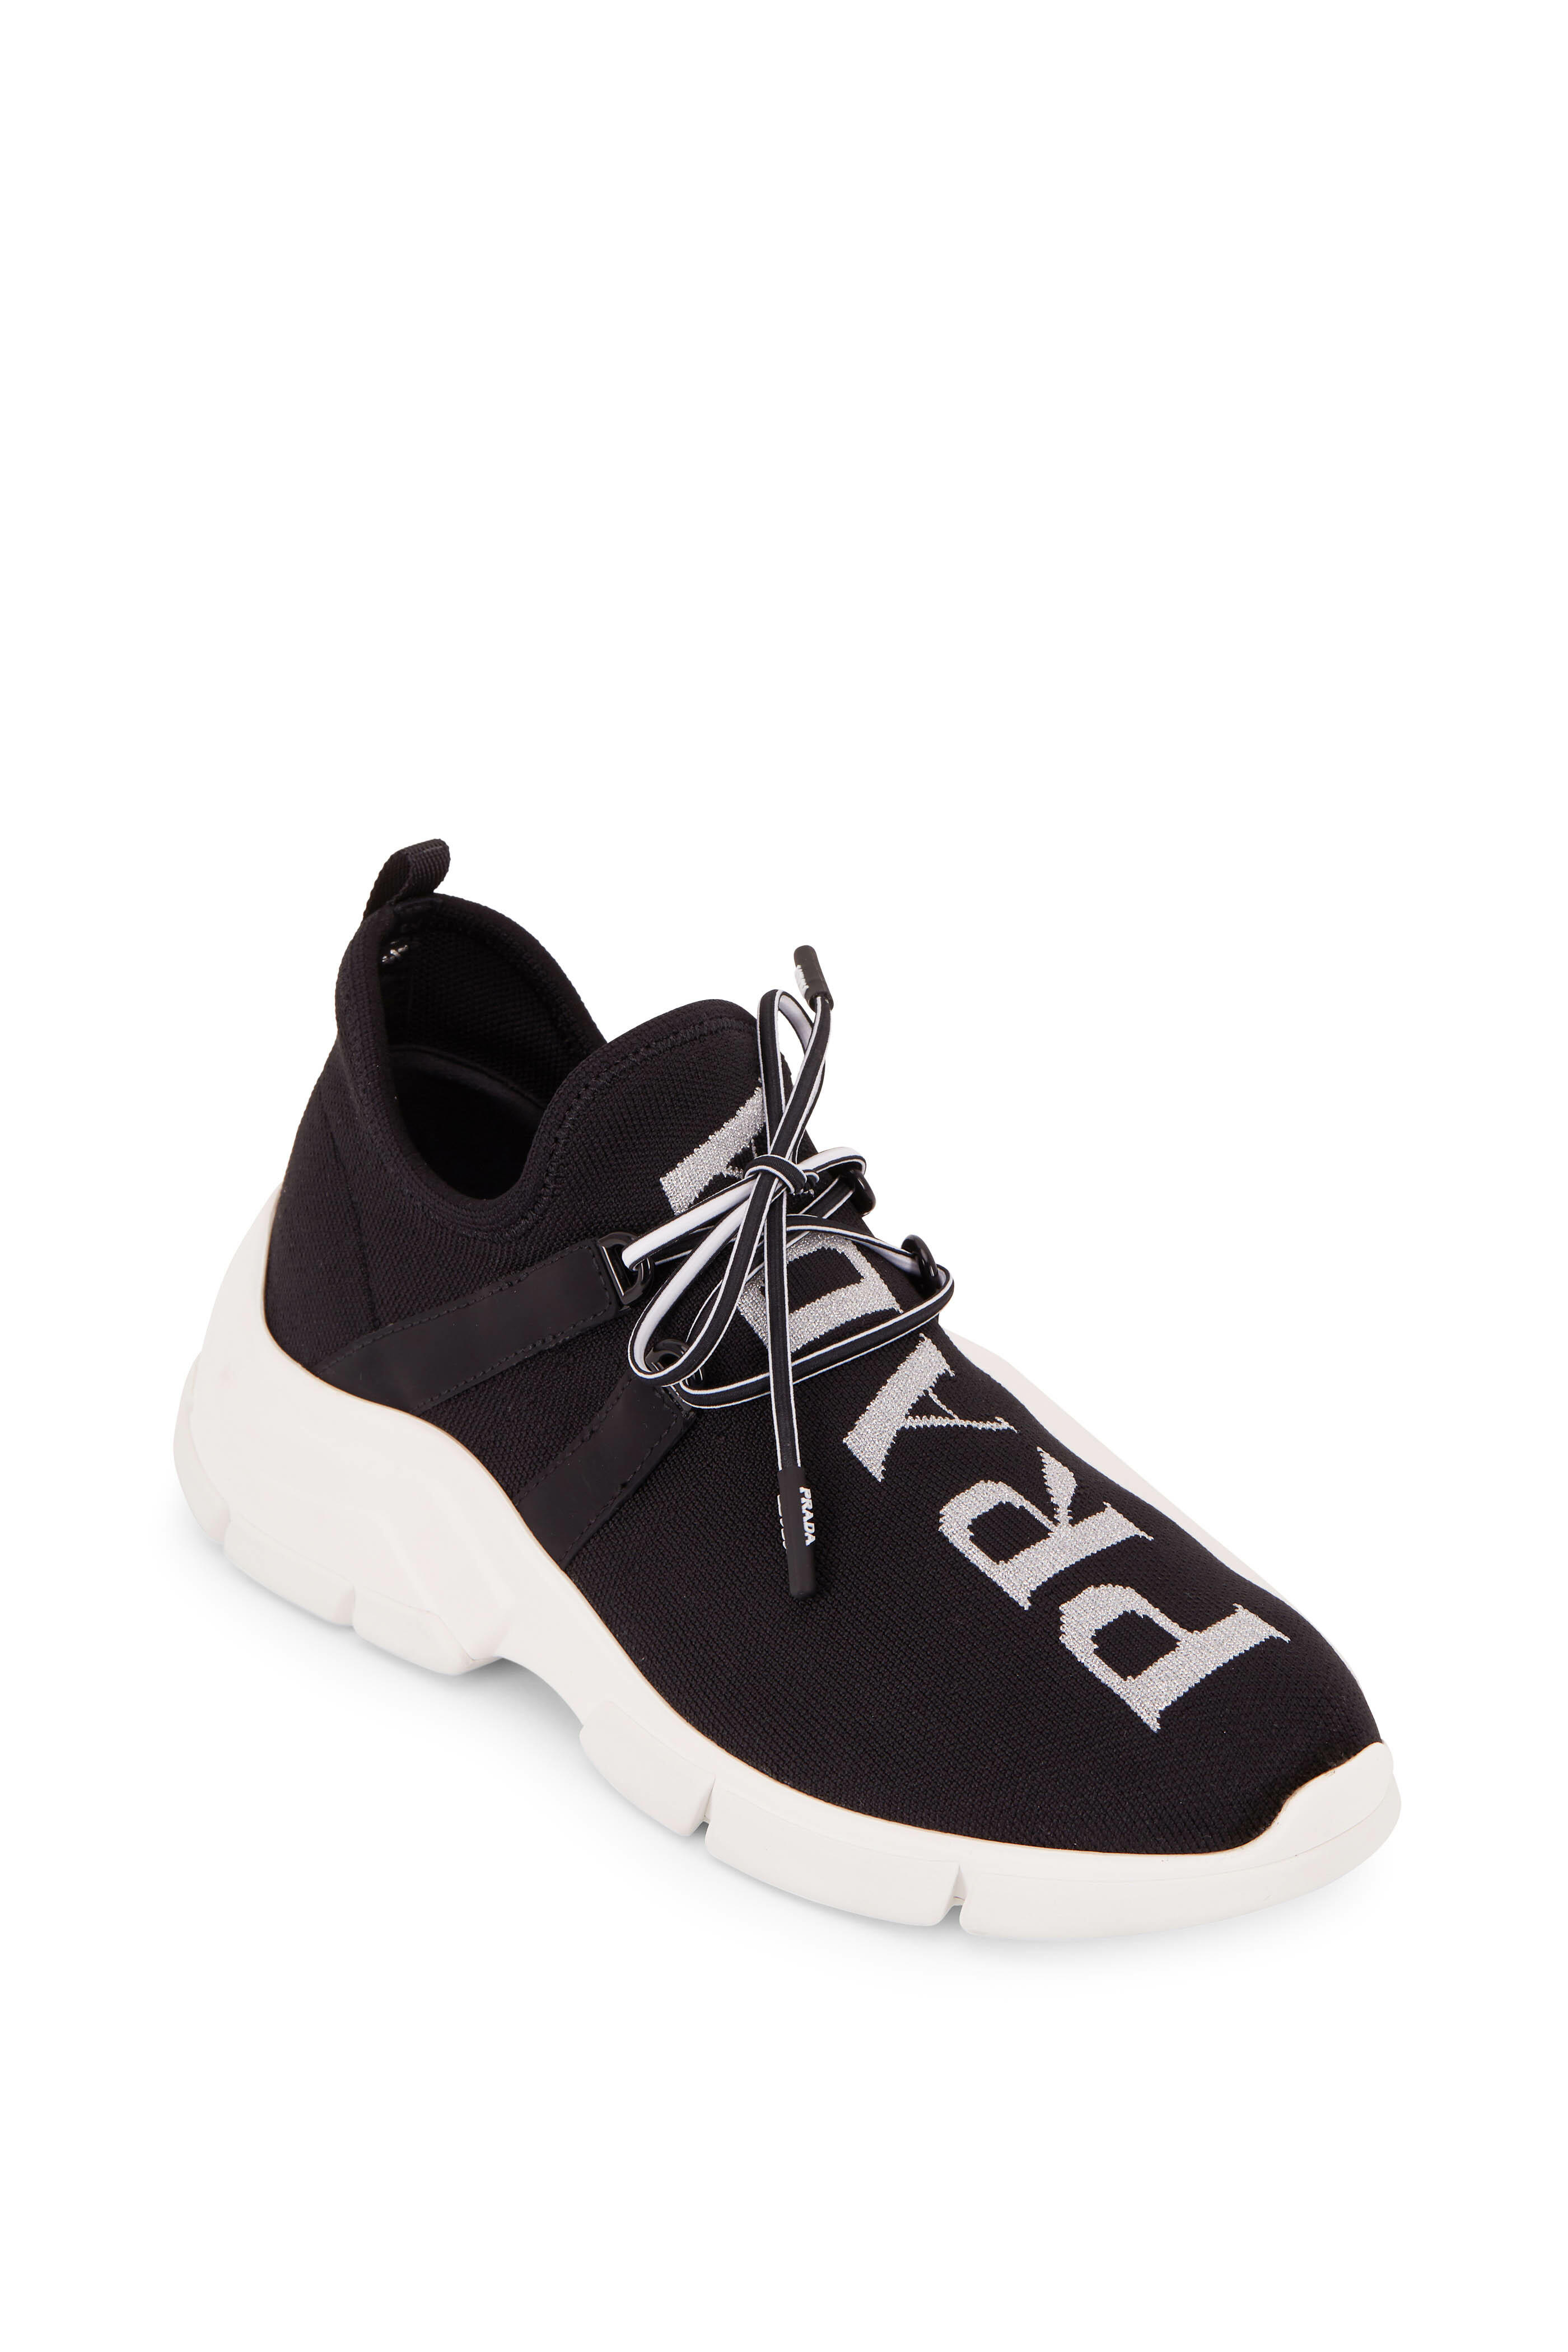 Prada - Black Knit & Silver Logo Sneaker | Mitchell Stores